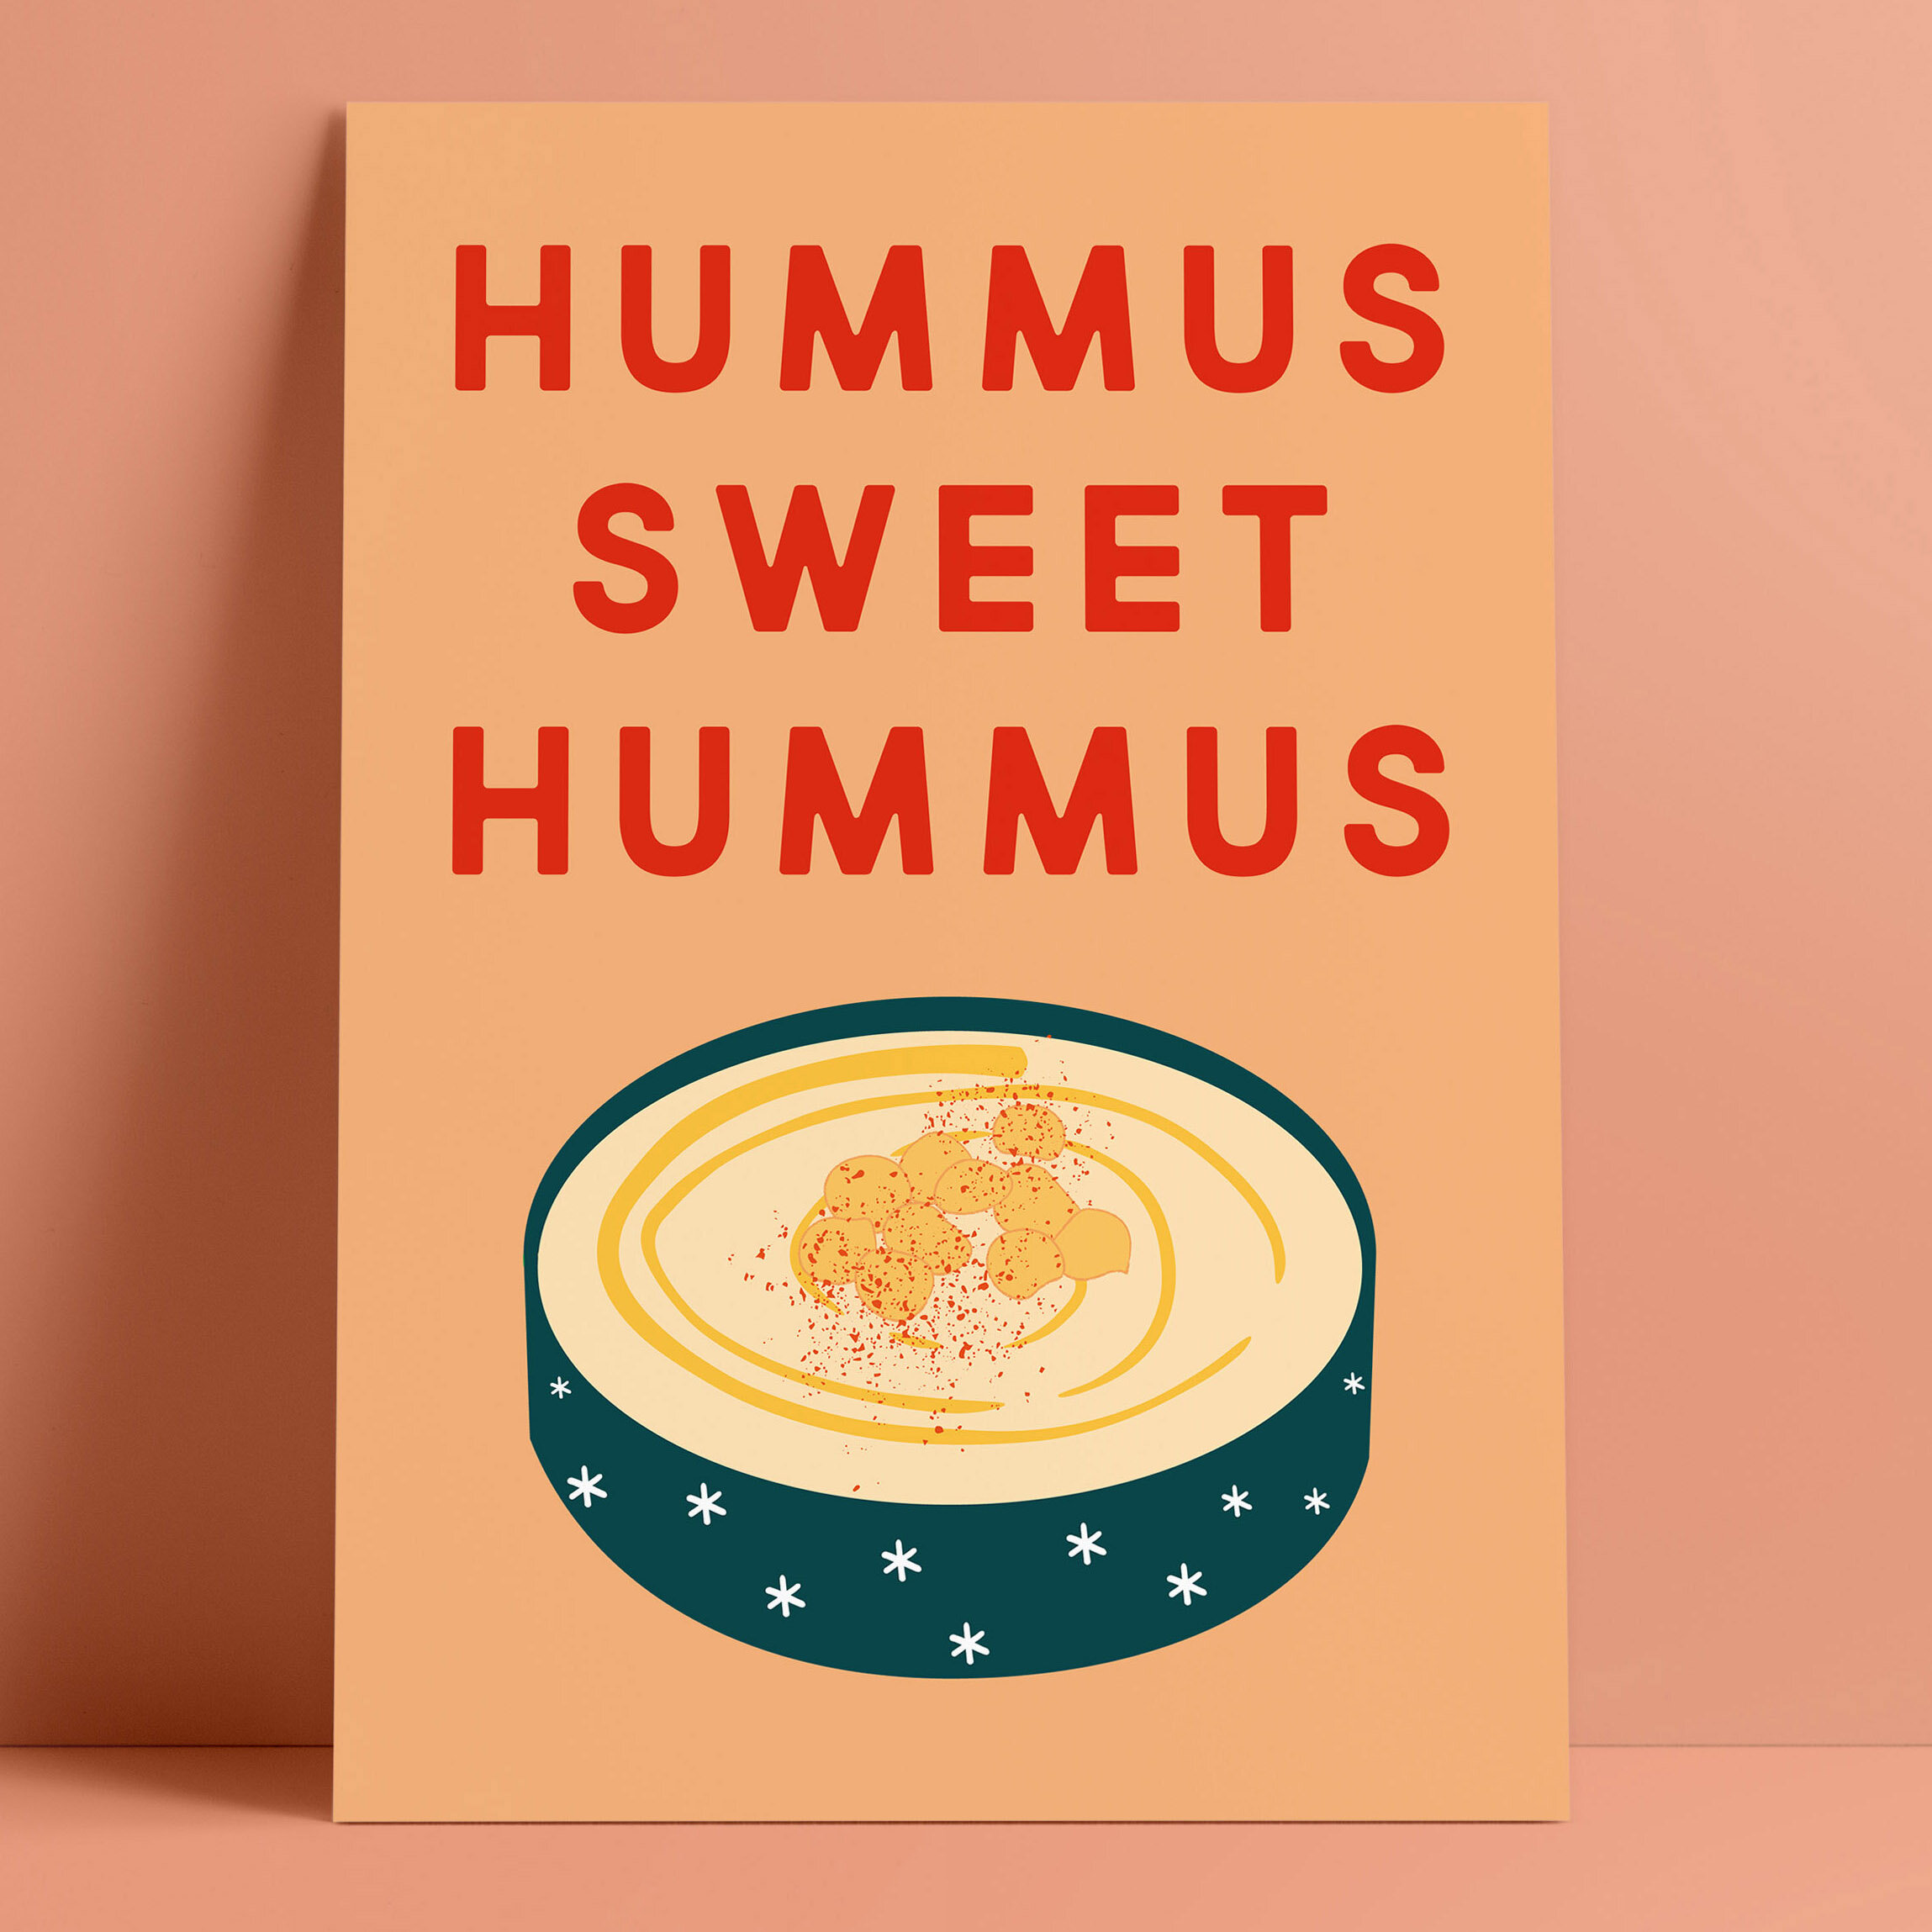 Hummus Sweet Hummus.jpg